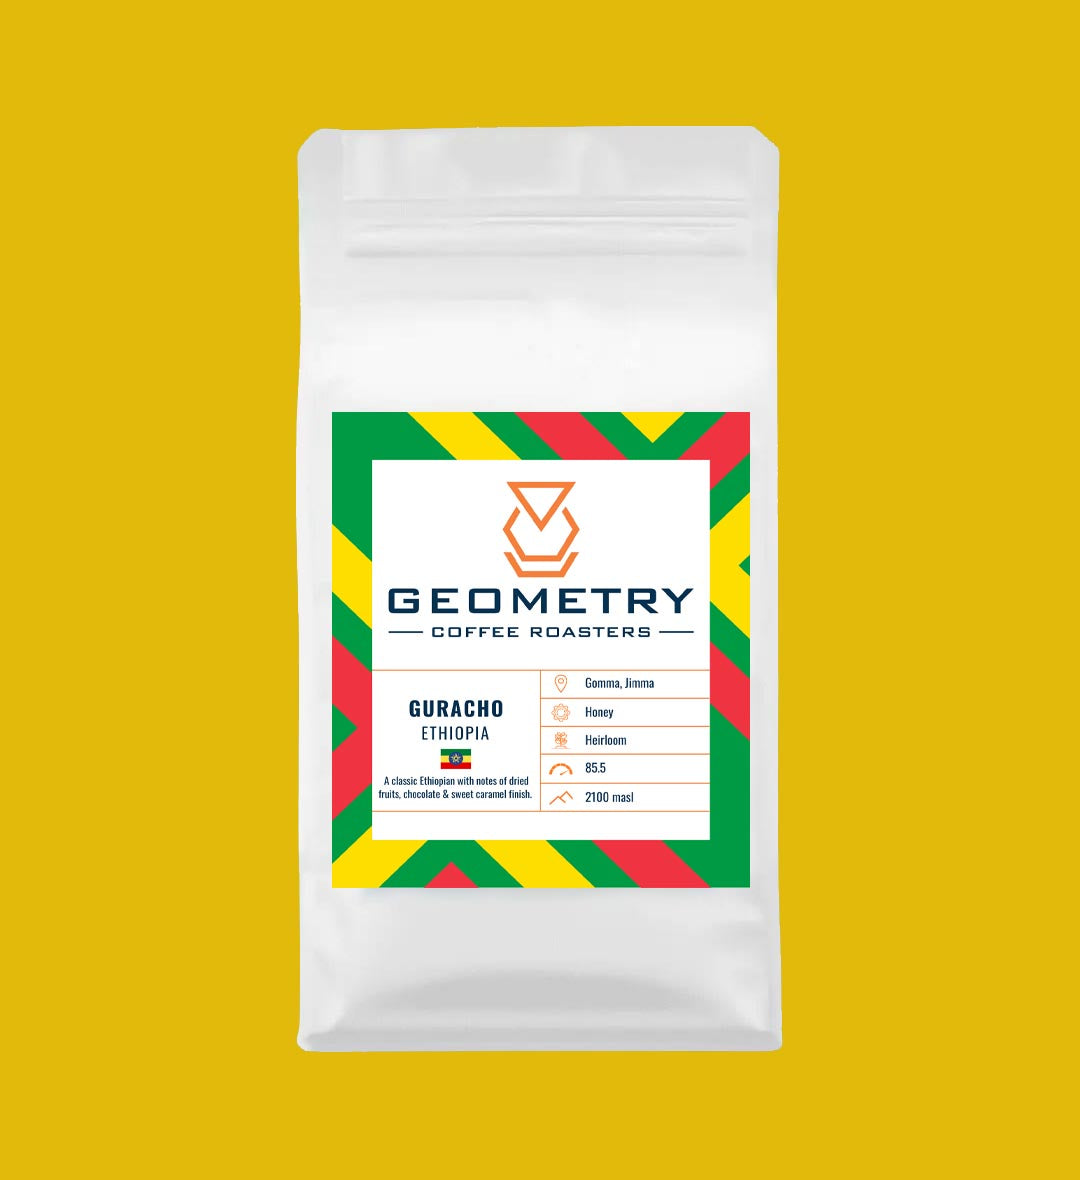 Guracho is an Ethiopian specialty coffee by Geometry Coffee Roasters Galway